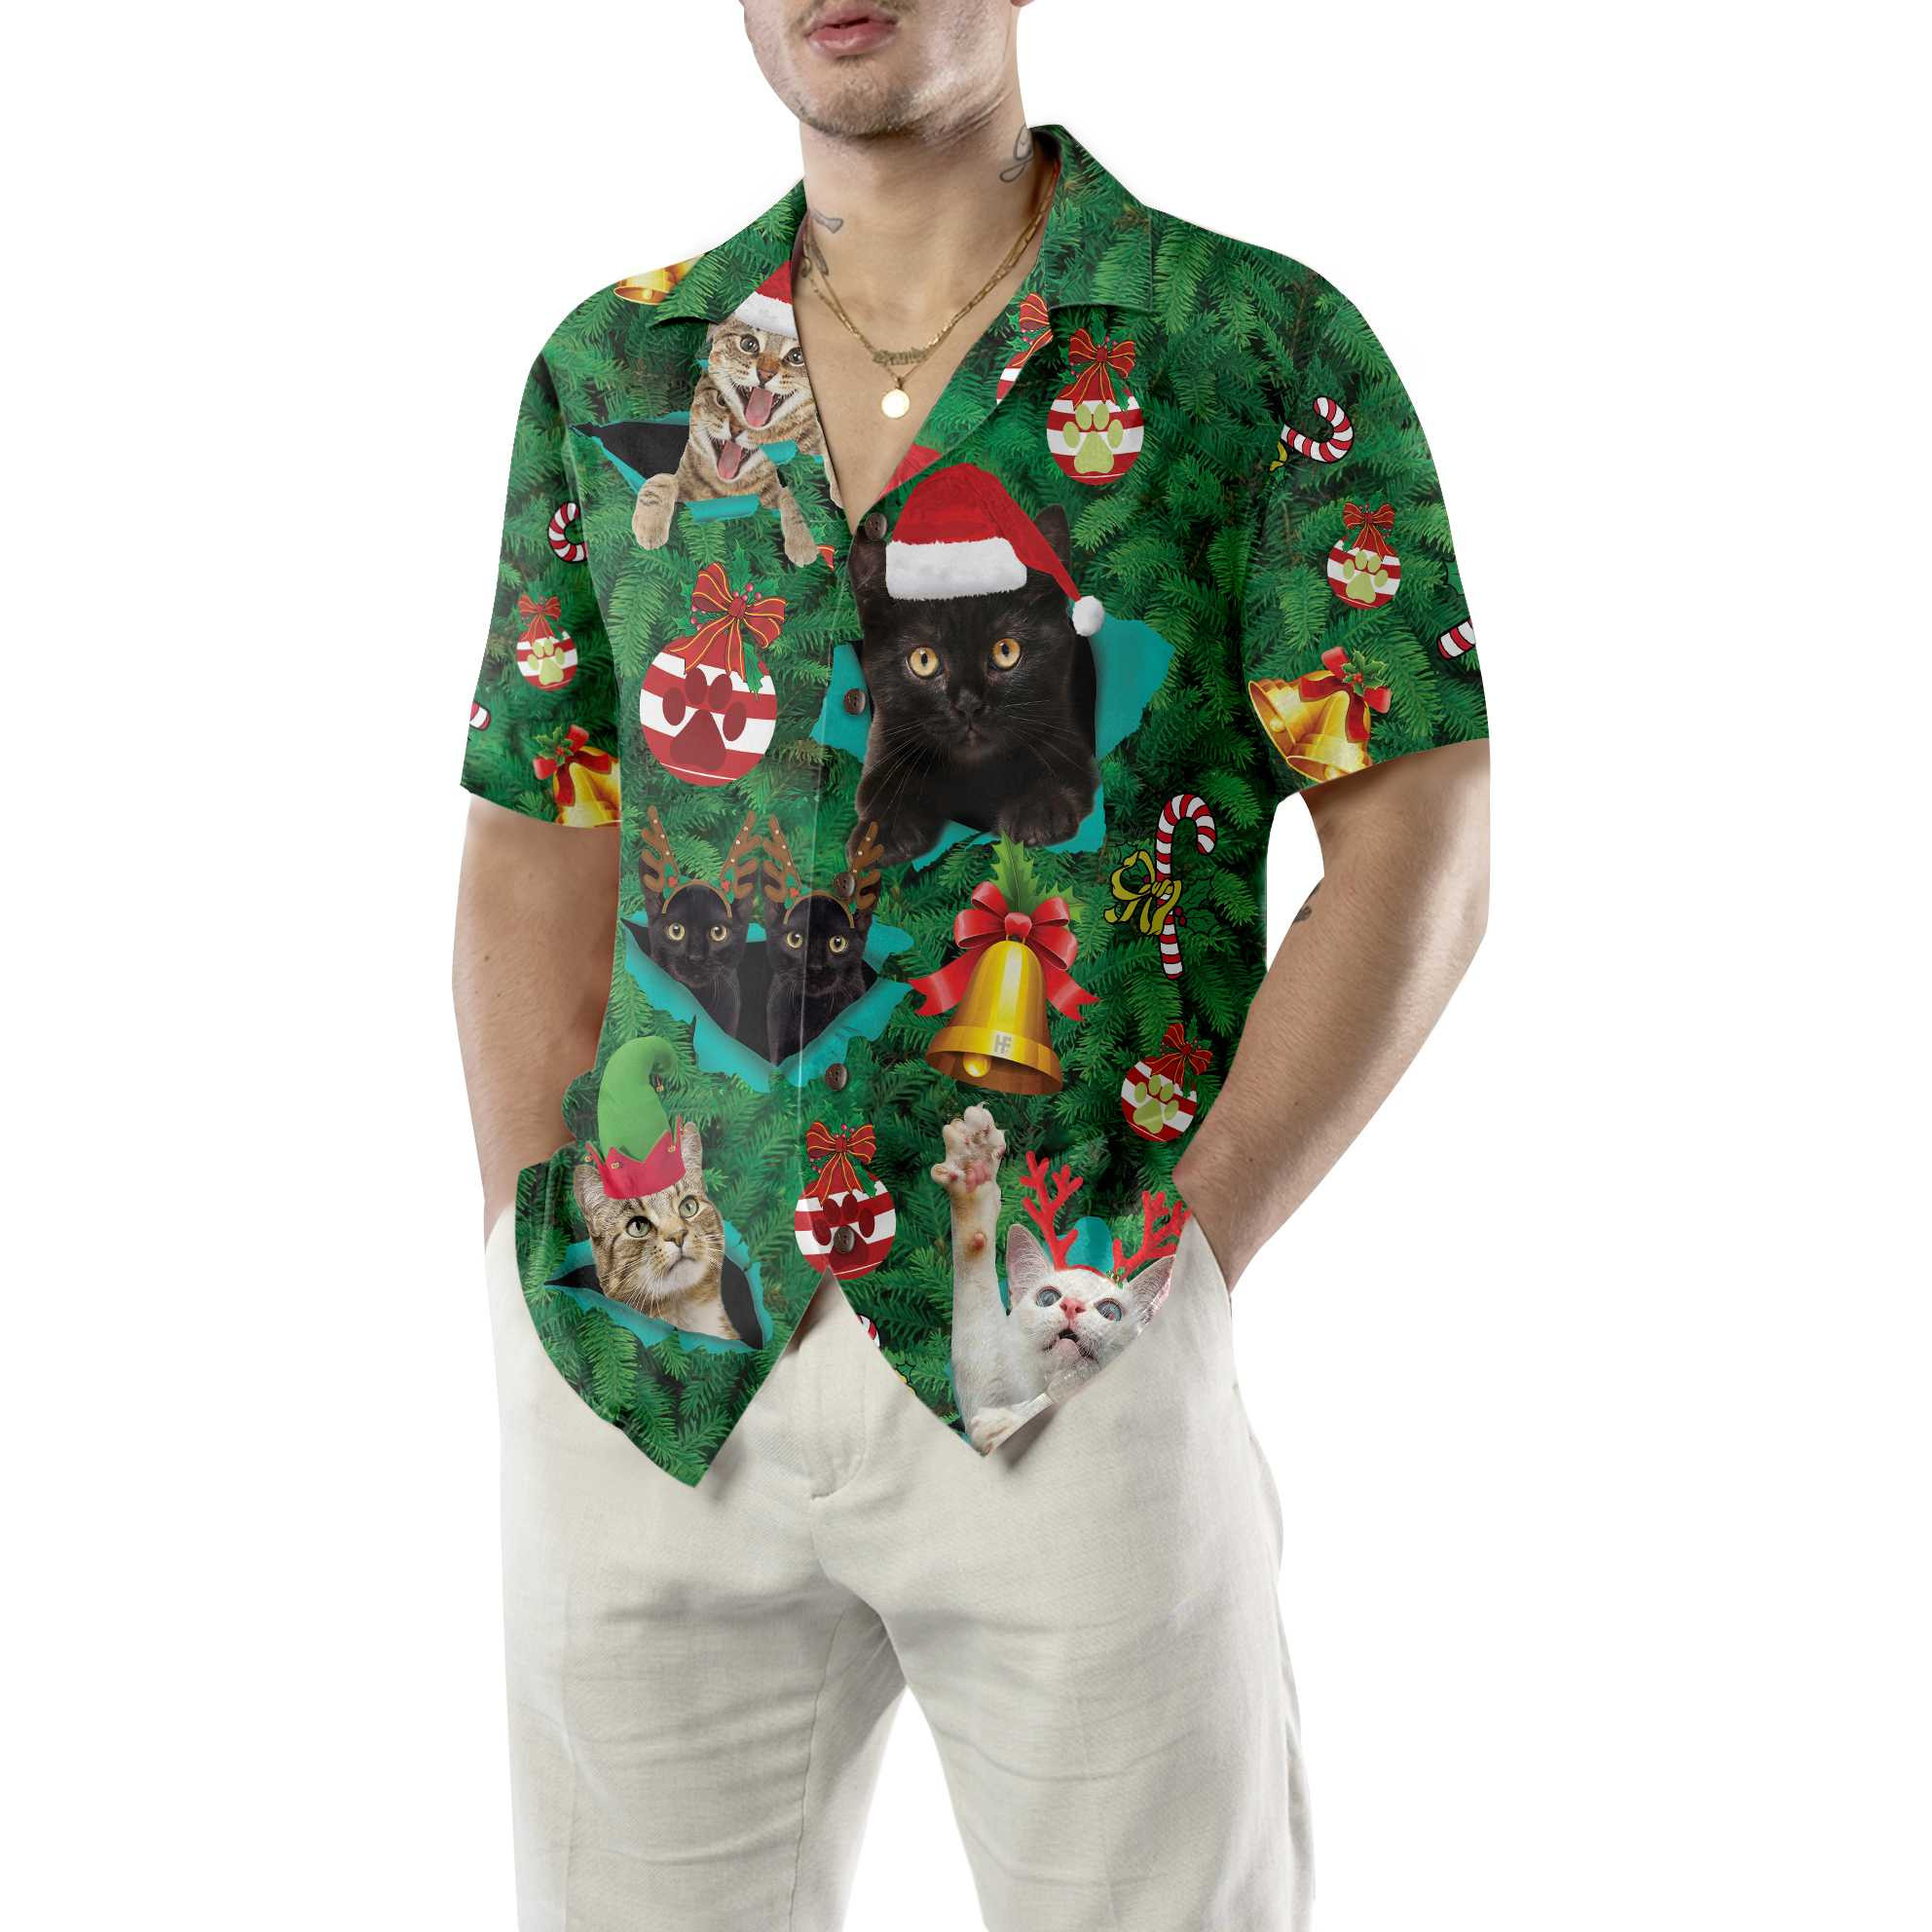 Cats For Christmas Hawaiian Shirt, Funny Christmas Cat Shirt, Best Gift For Christmas